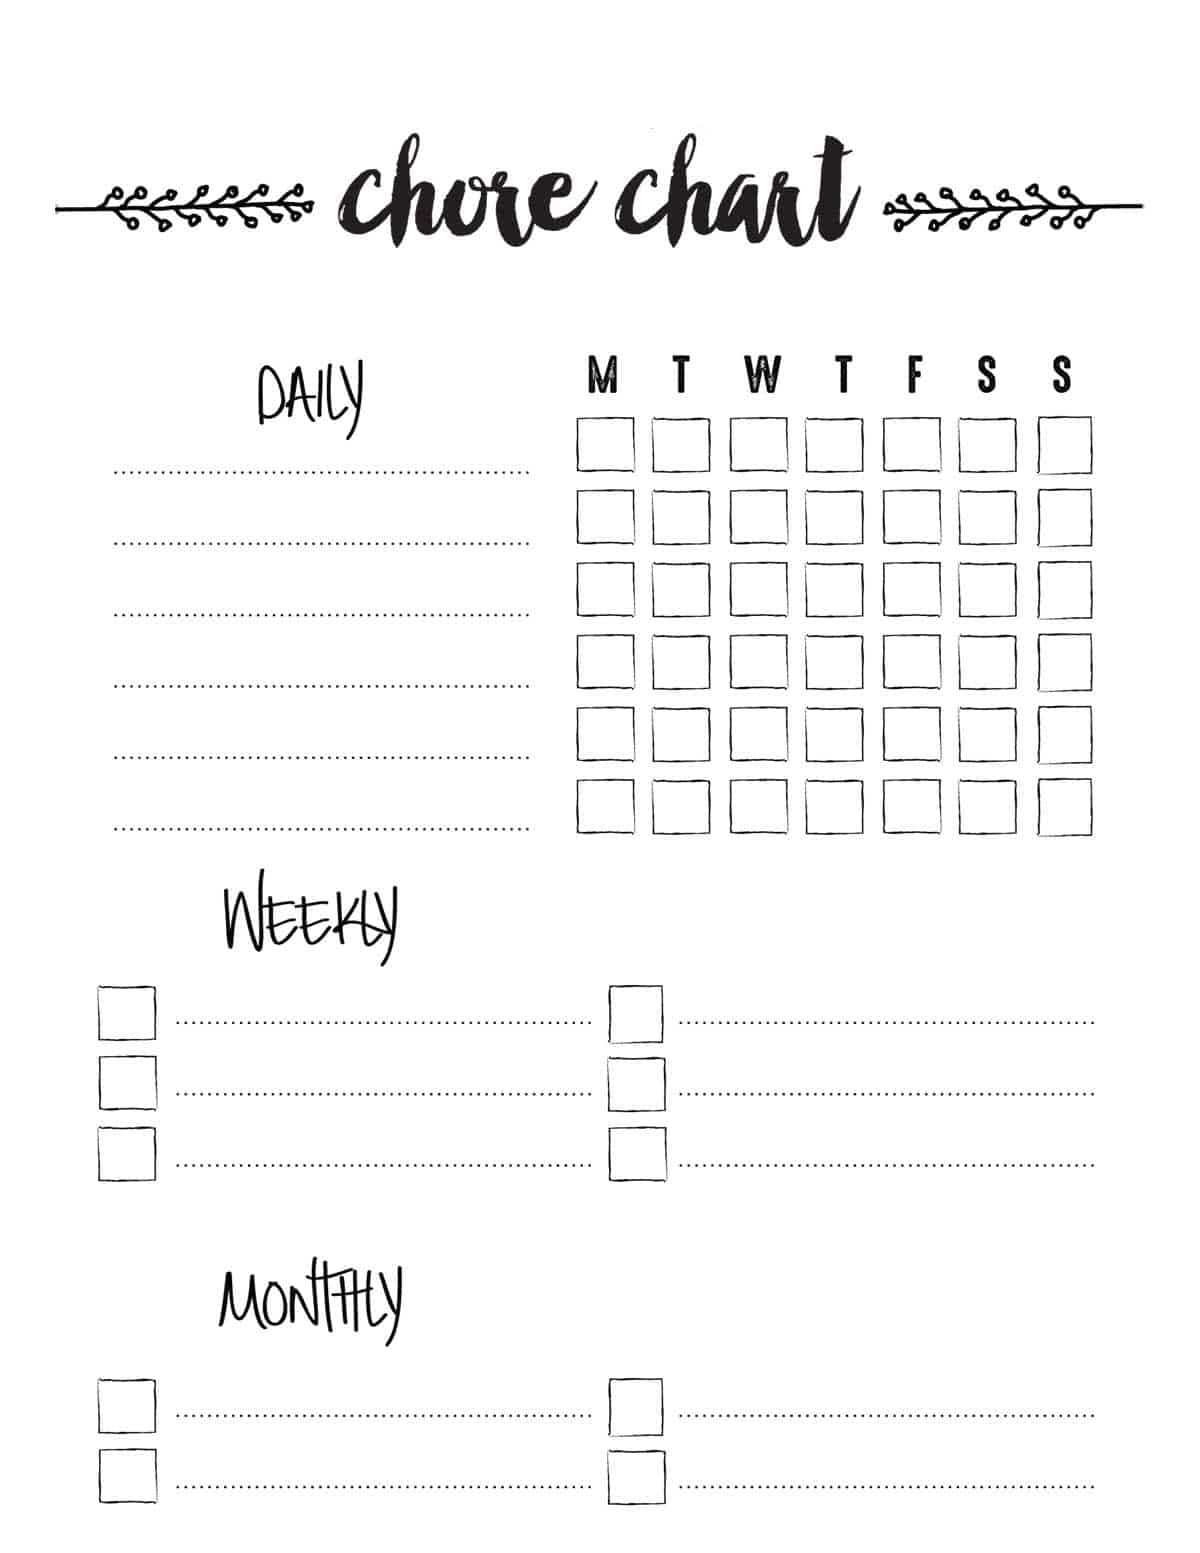 Chore Chart To Build Self Esteem Free Printable Skip To My Lou